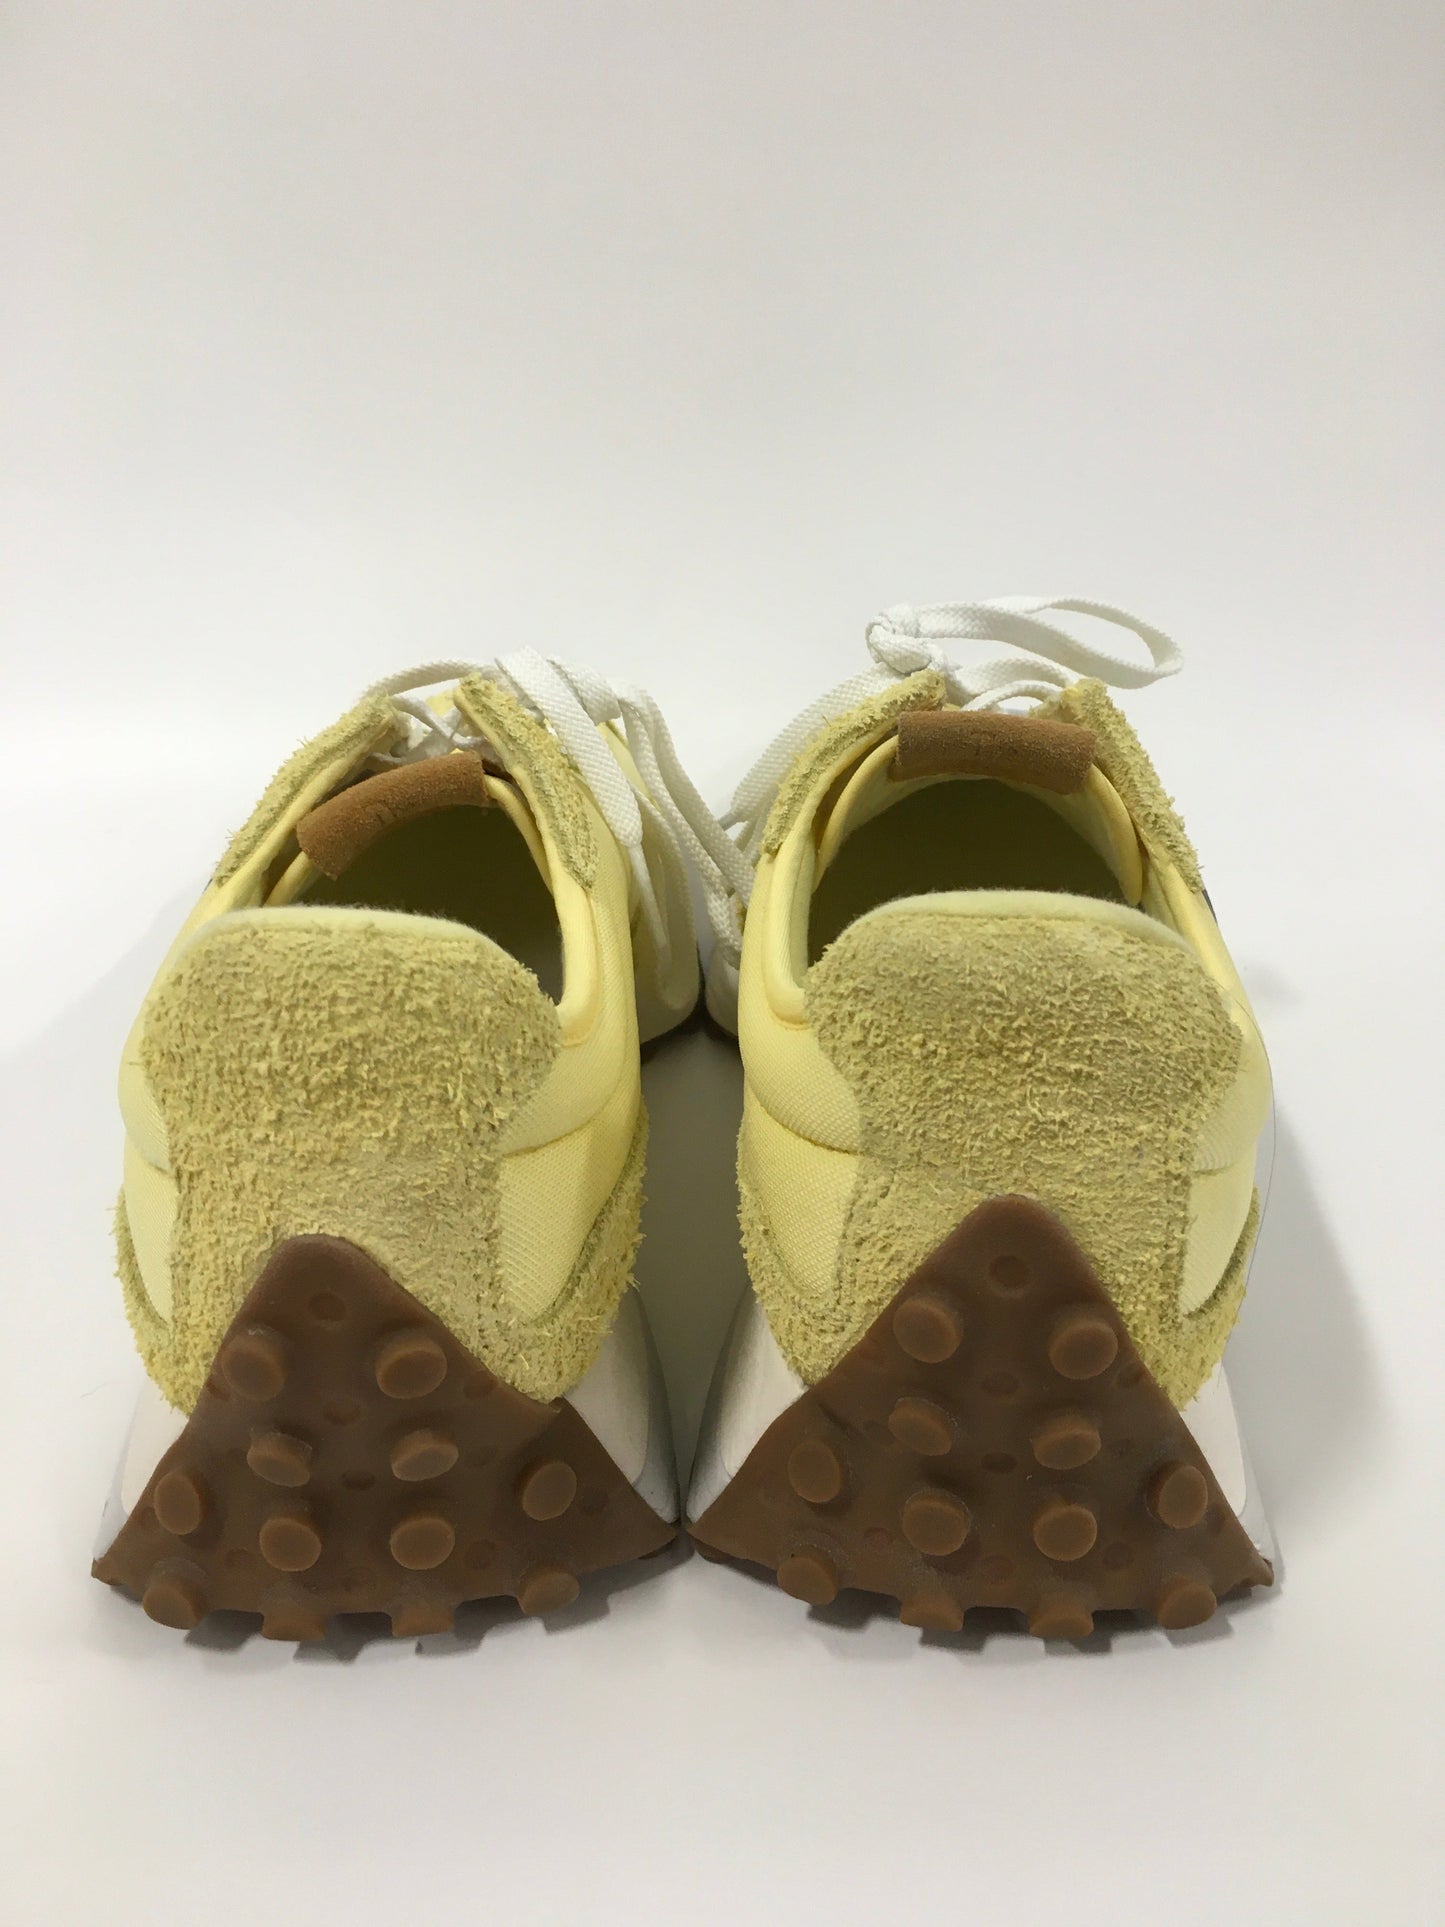 Yellow Shoes Athletic New Balance, Size 9.5